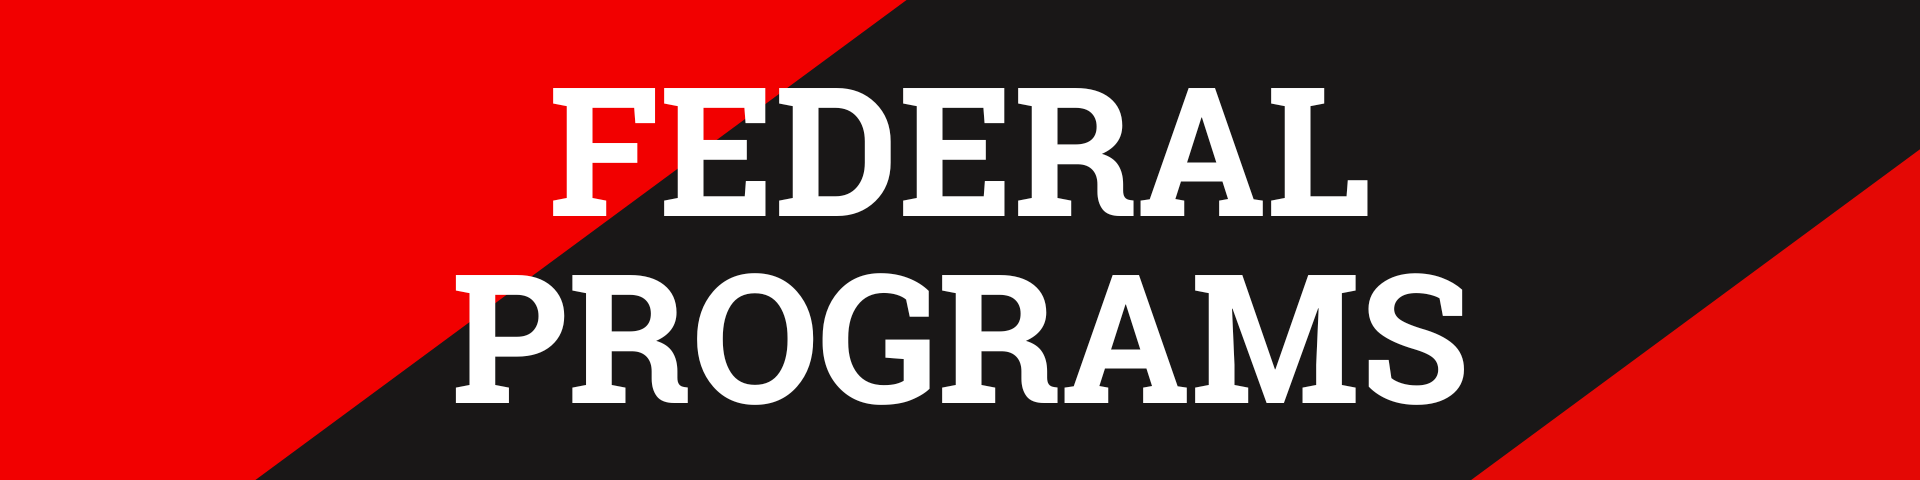 federal programs